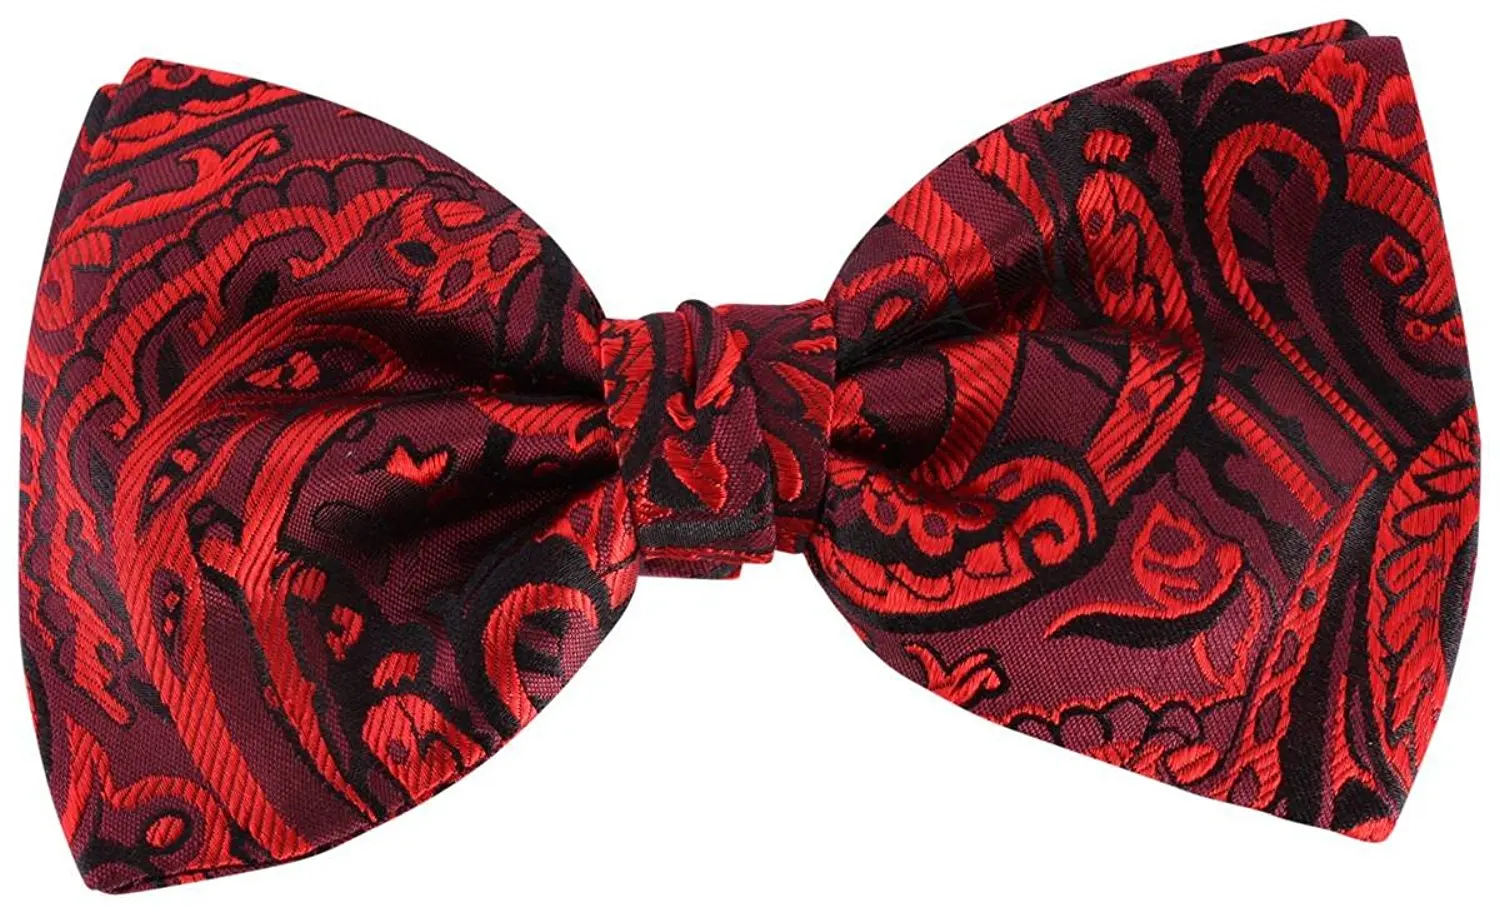 Cheap Red Silk Tie, find Red Silk Tie deals on line at Alibaba.com